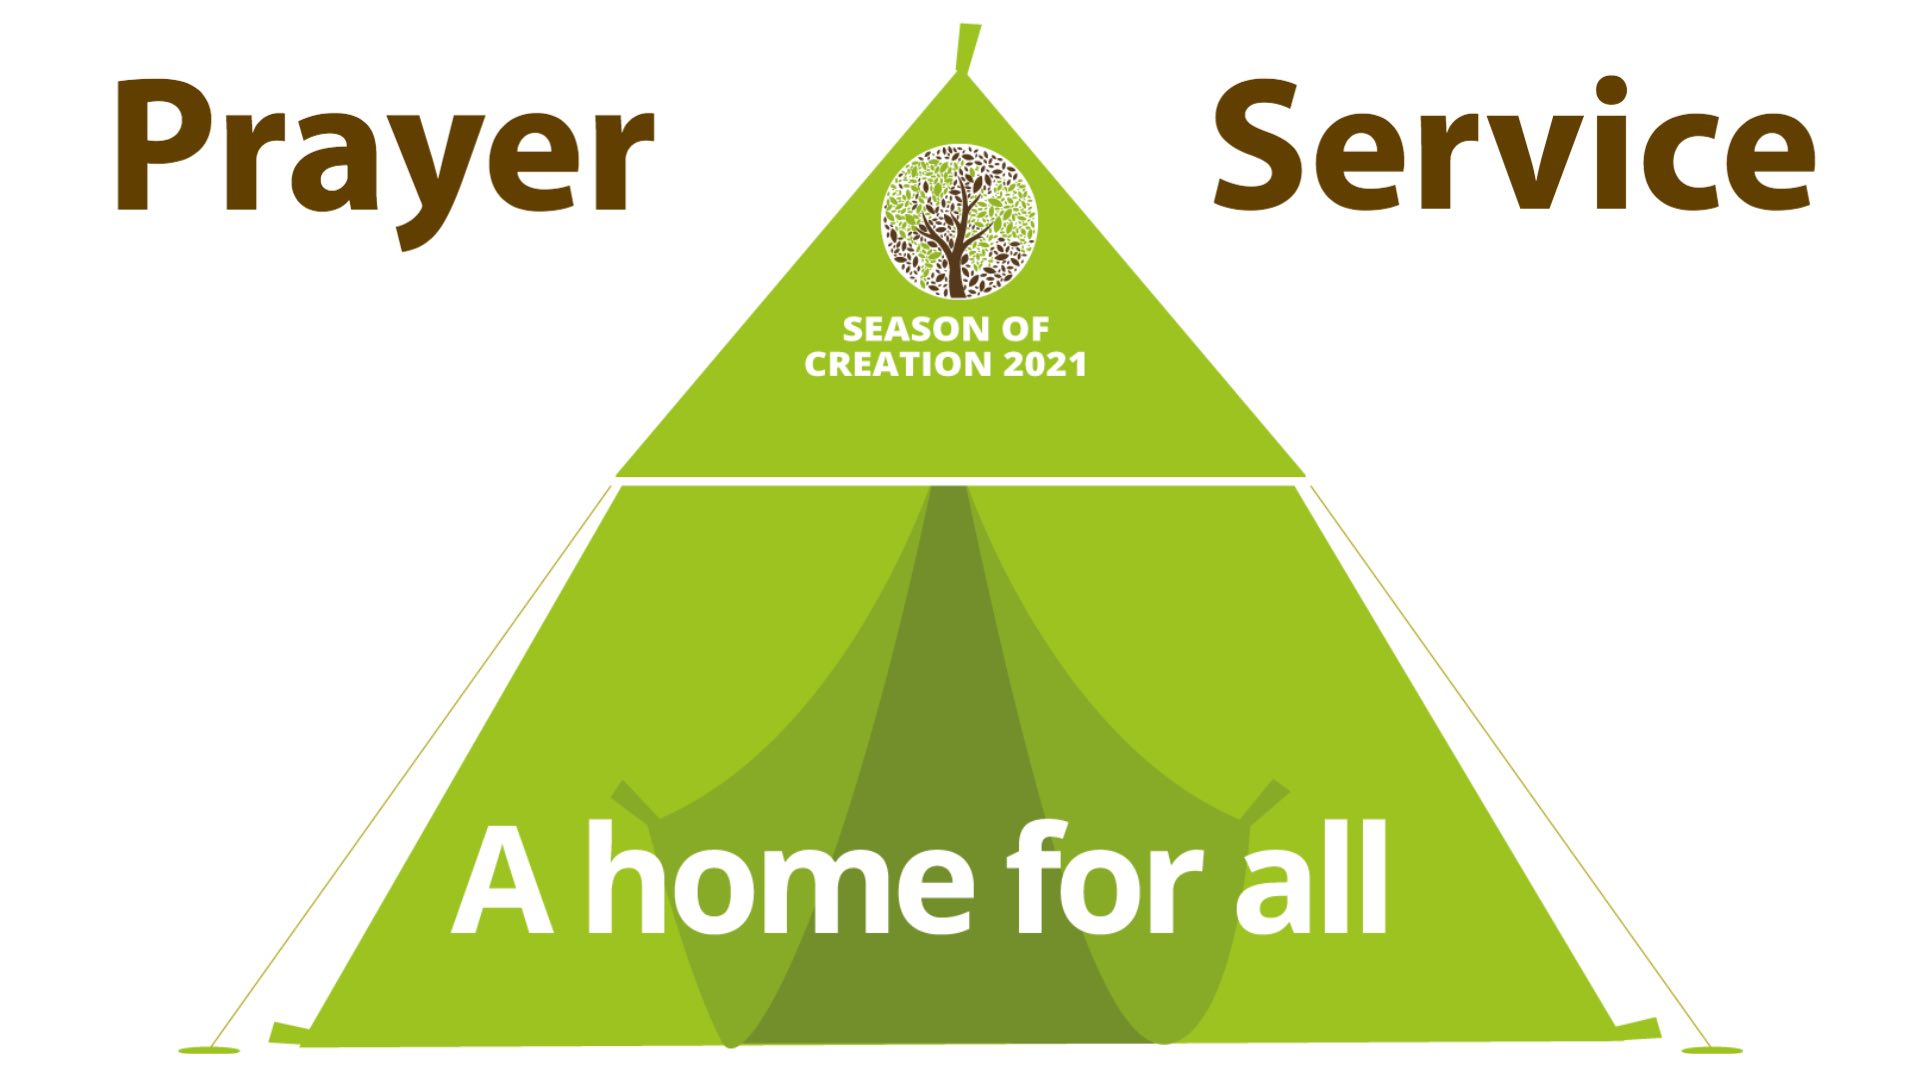 2021 Season of Creation prayer service for your community